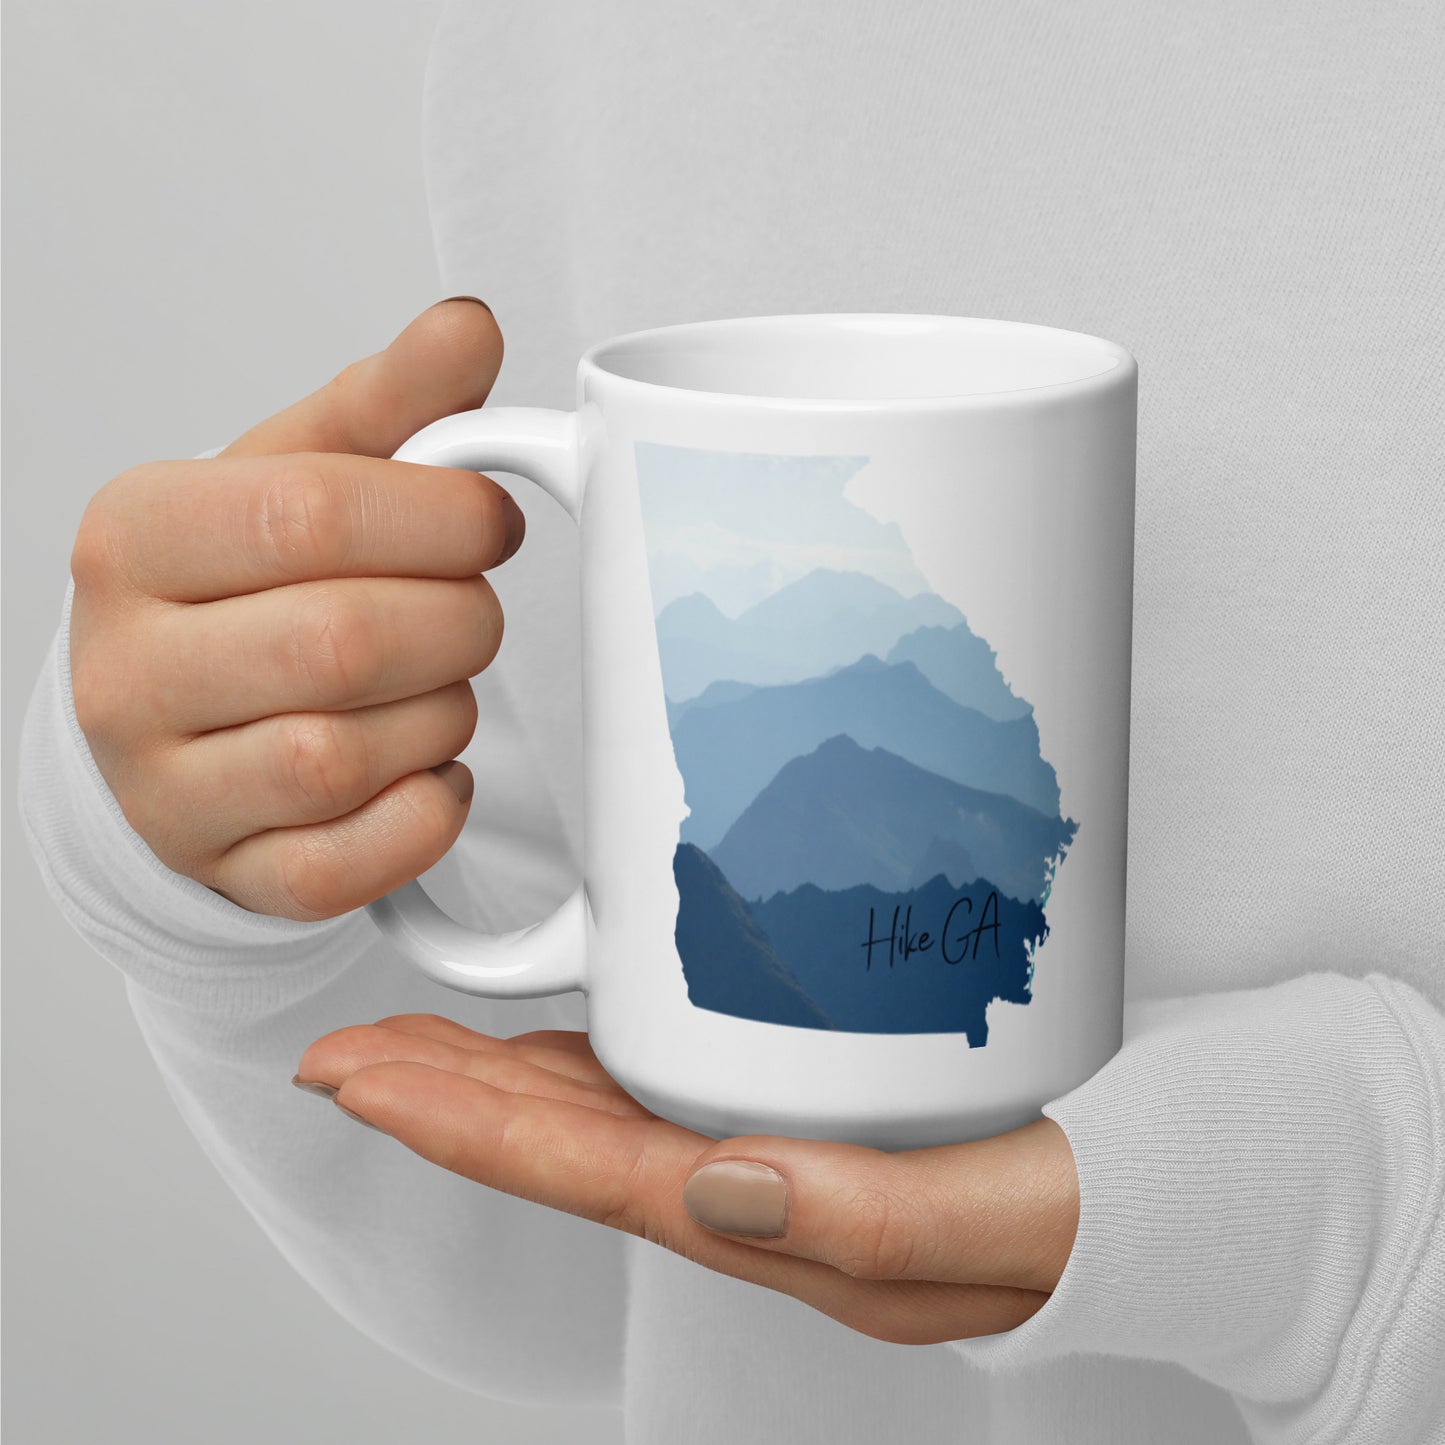 Hike GA (Georgia State) - White glossy mug